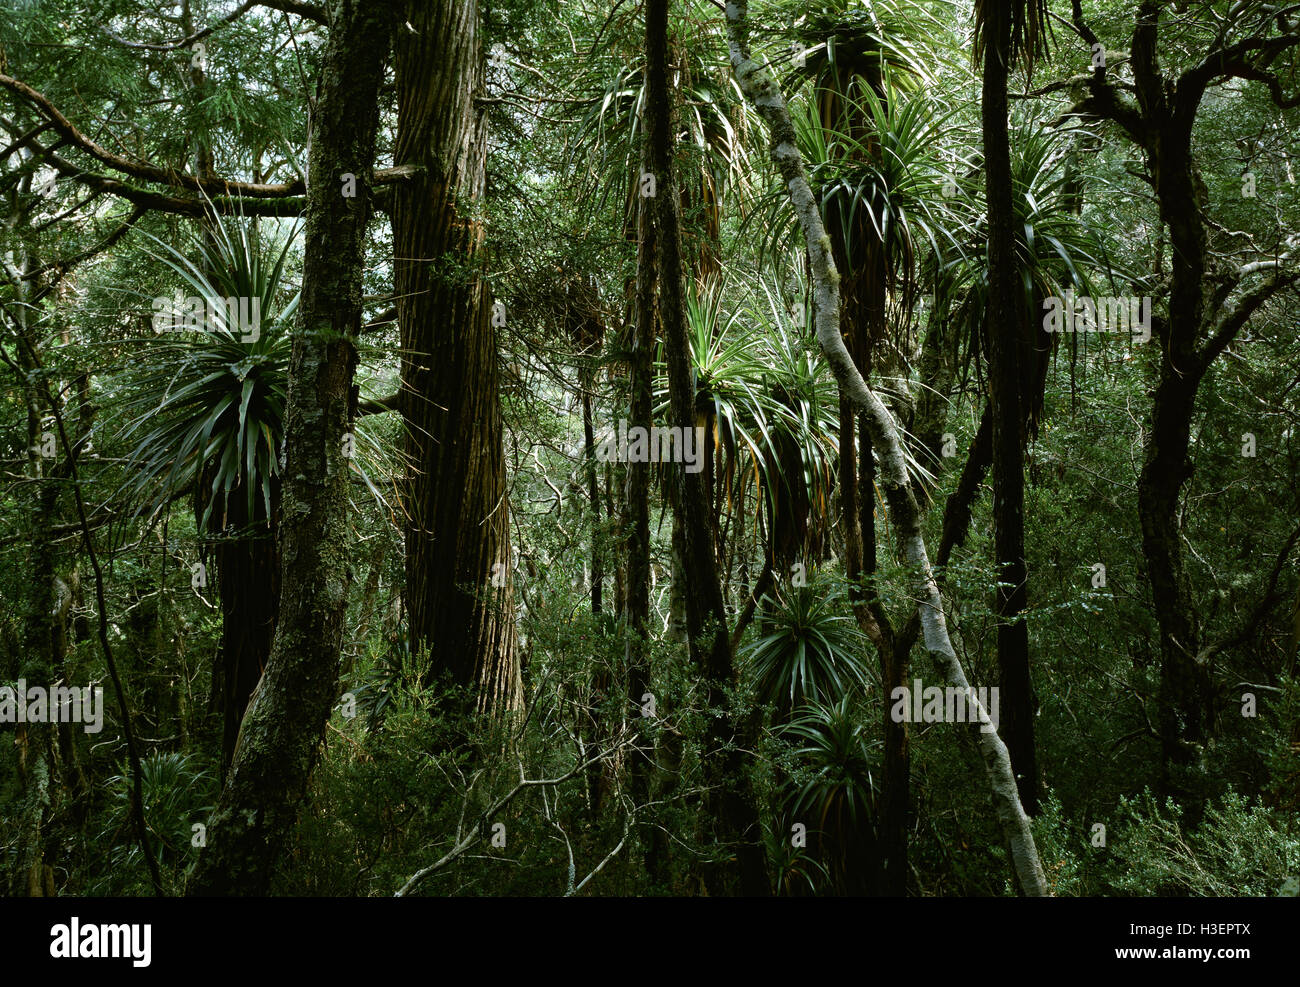 La foresta pluviale temperata con pandanus, re billy pine (athrotaxis selaginoides), e mirto (nothofagus cunninghami). Foto Stock